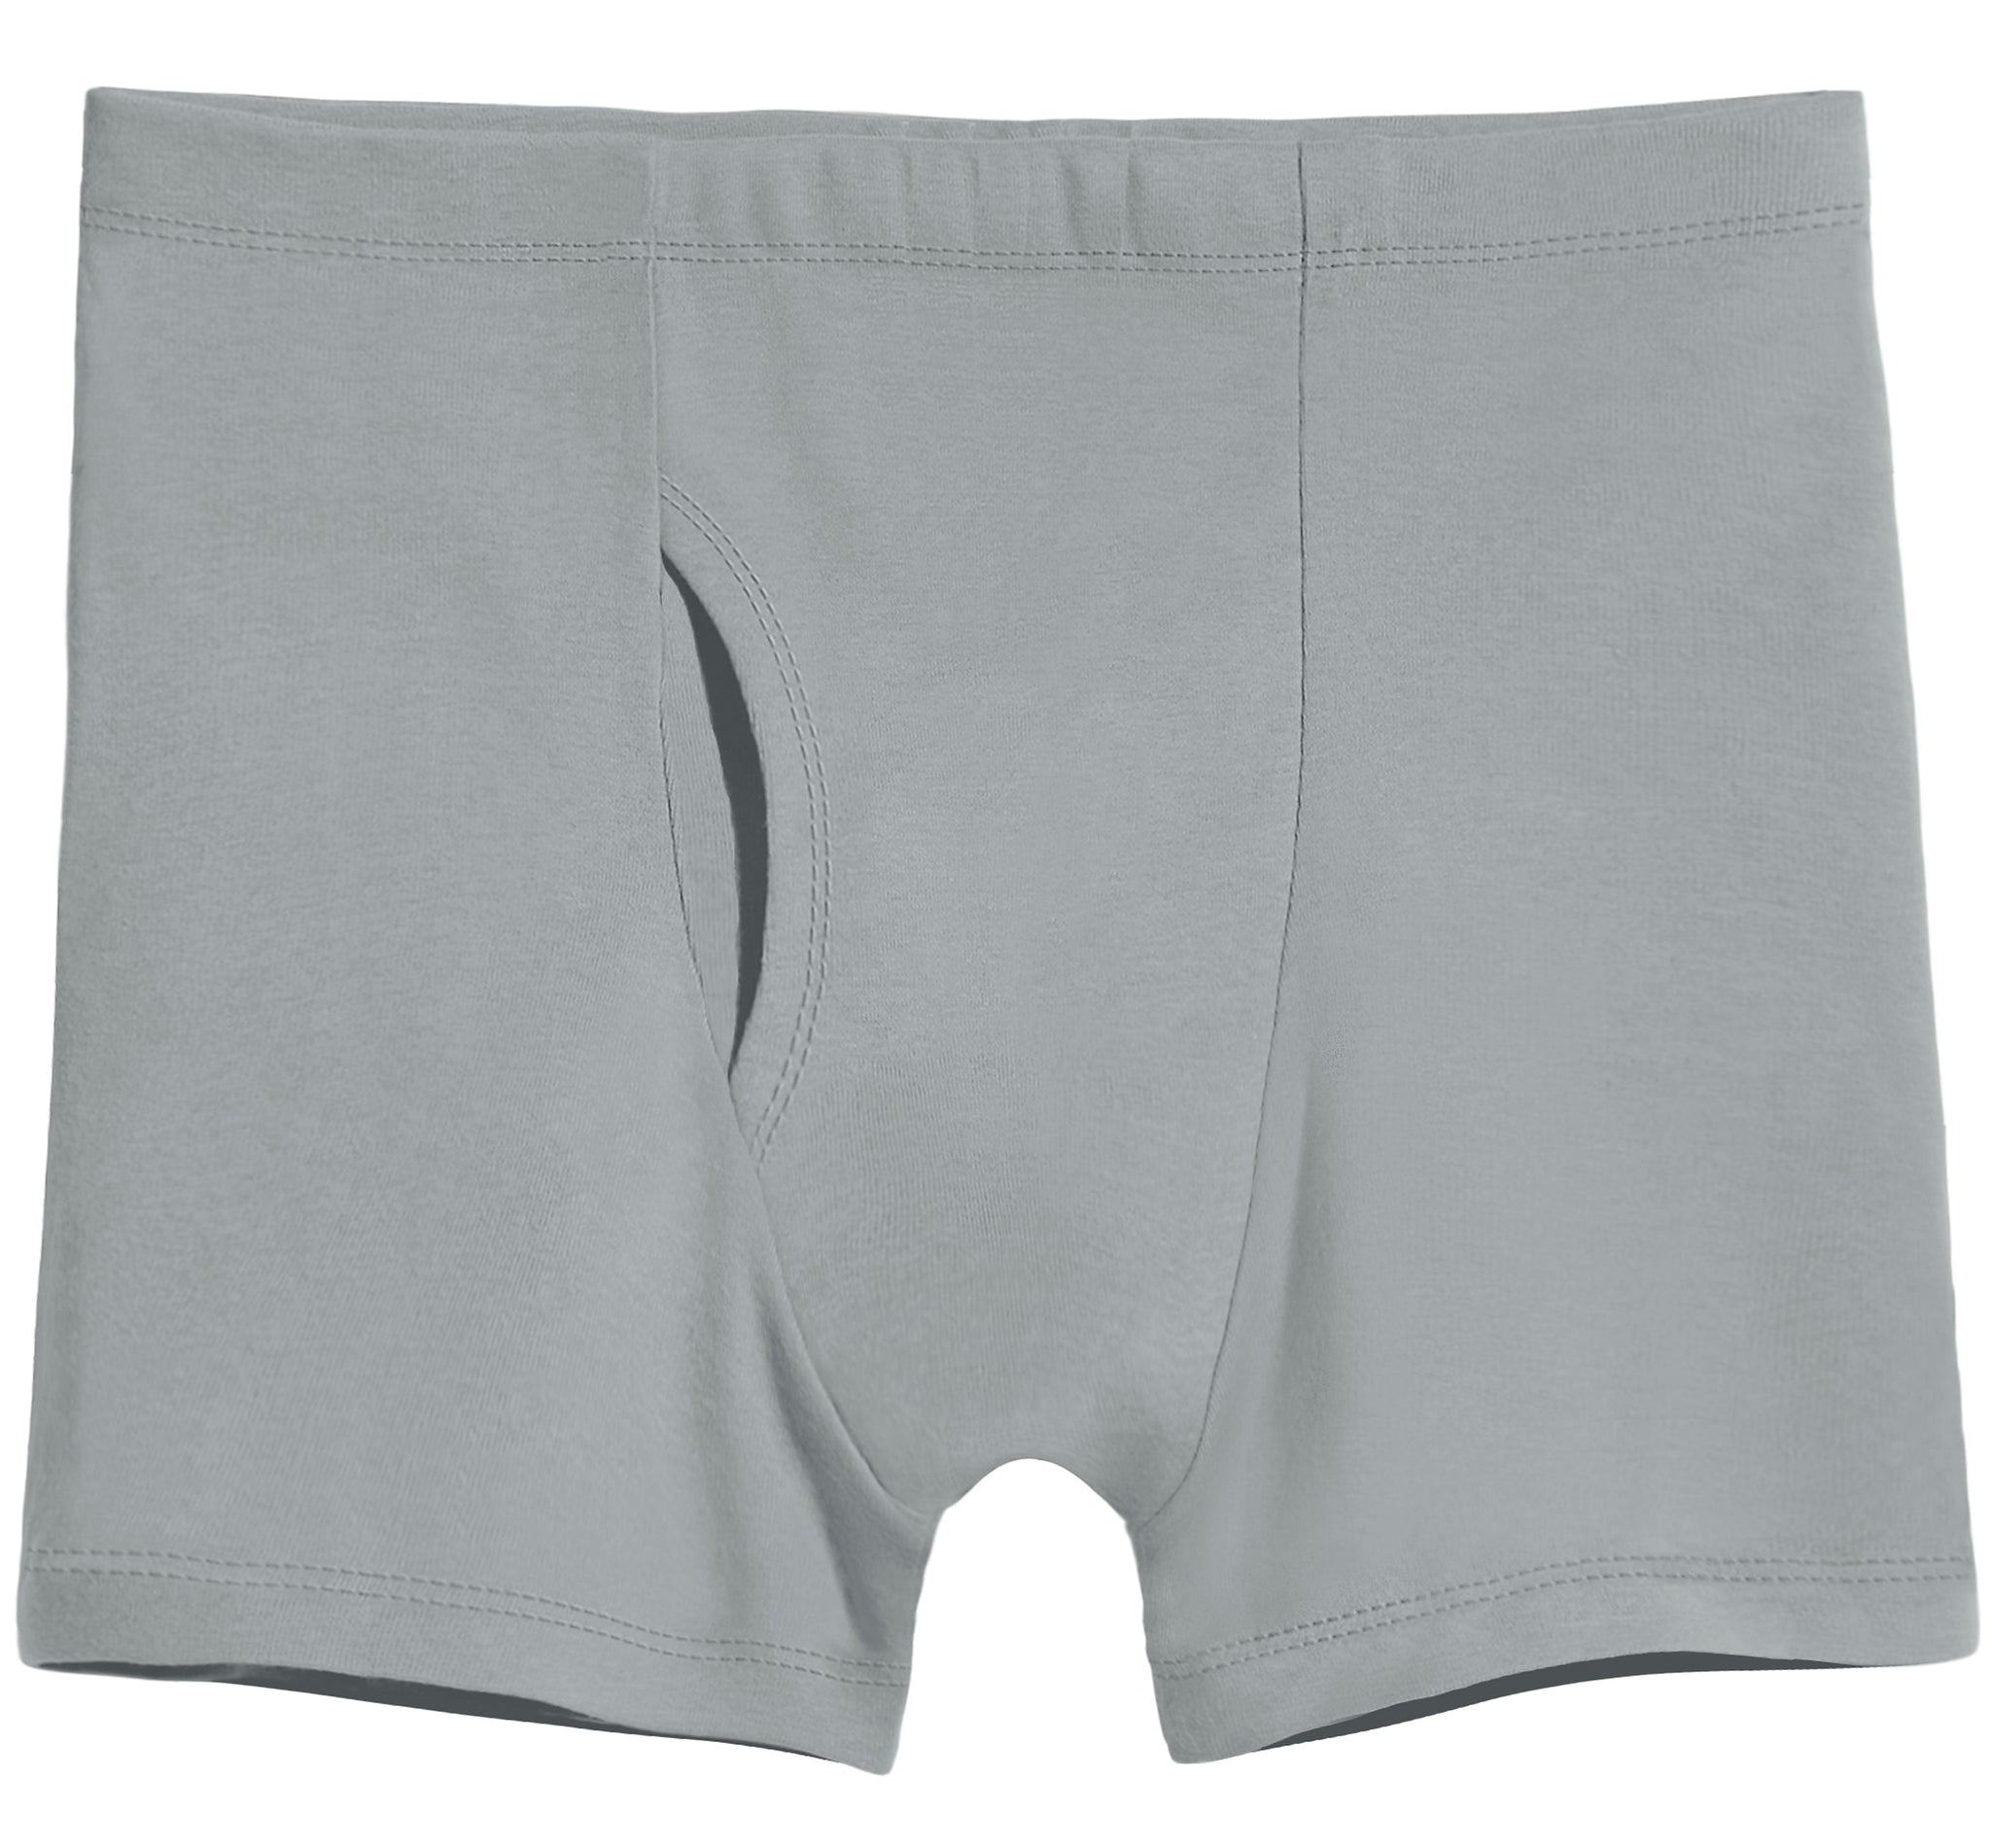 6 Men Classic Slips Sports Underwear 100% Cotton Briefs White Pants Soft  Comfort